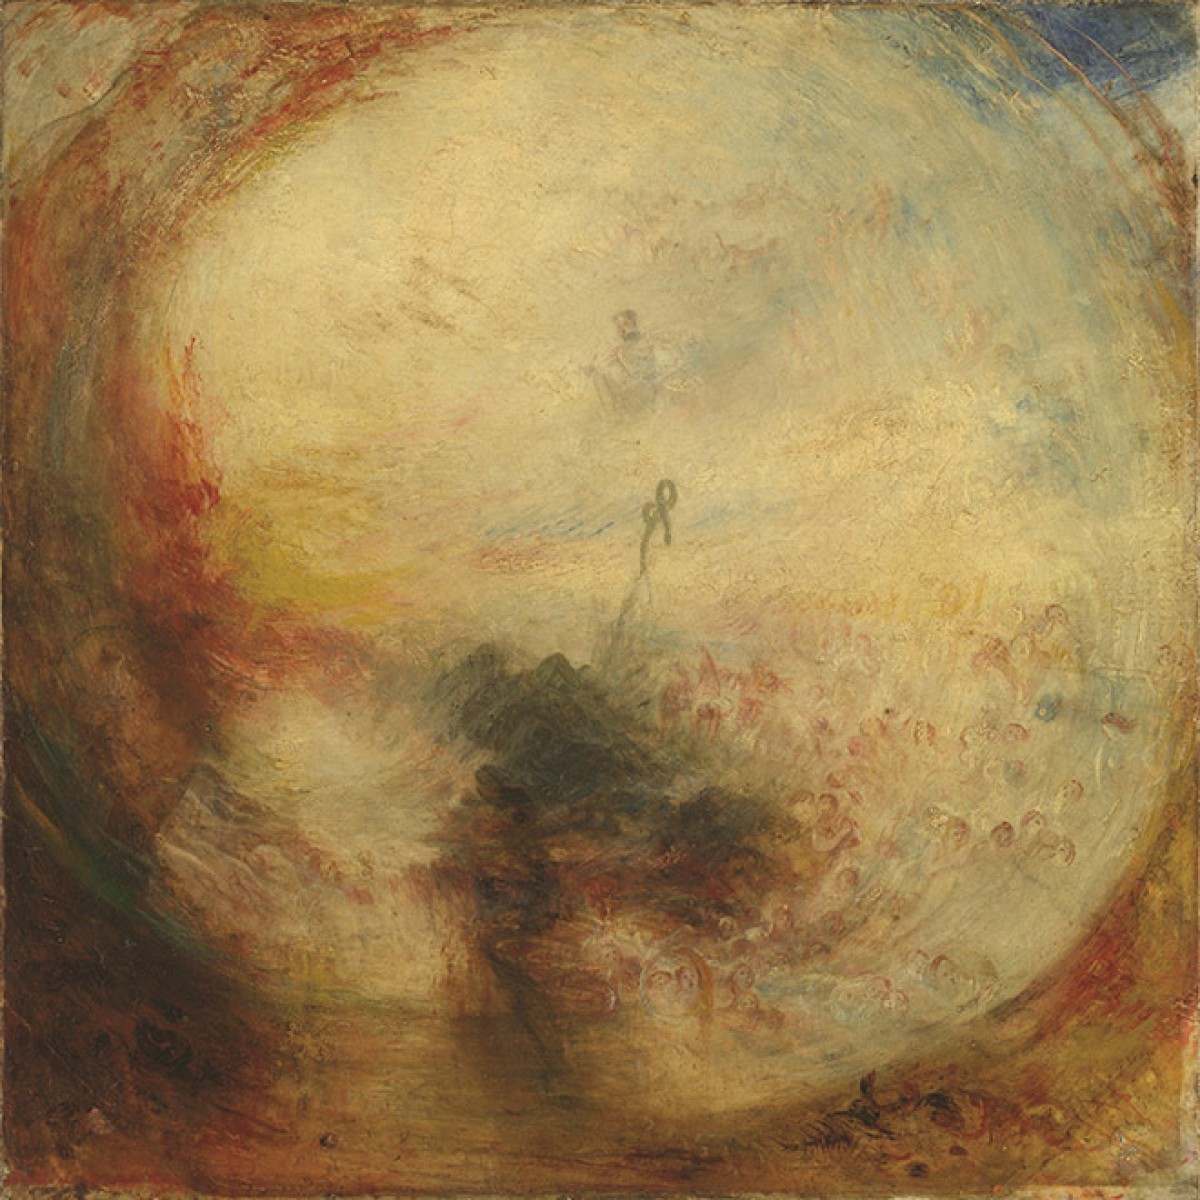 J.M.W. Turner, Light and Colour (Goethe’s Theory)